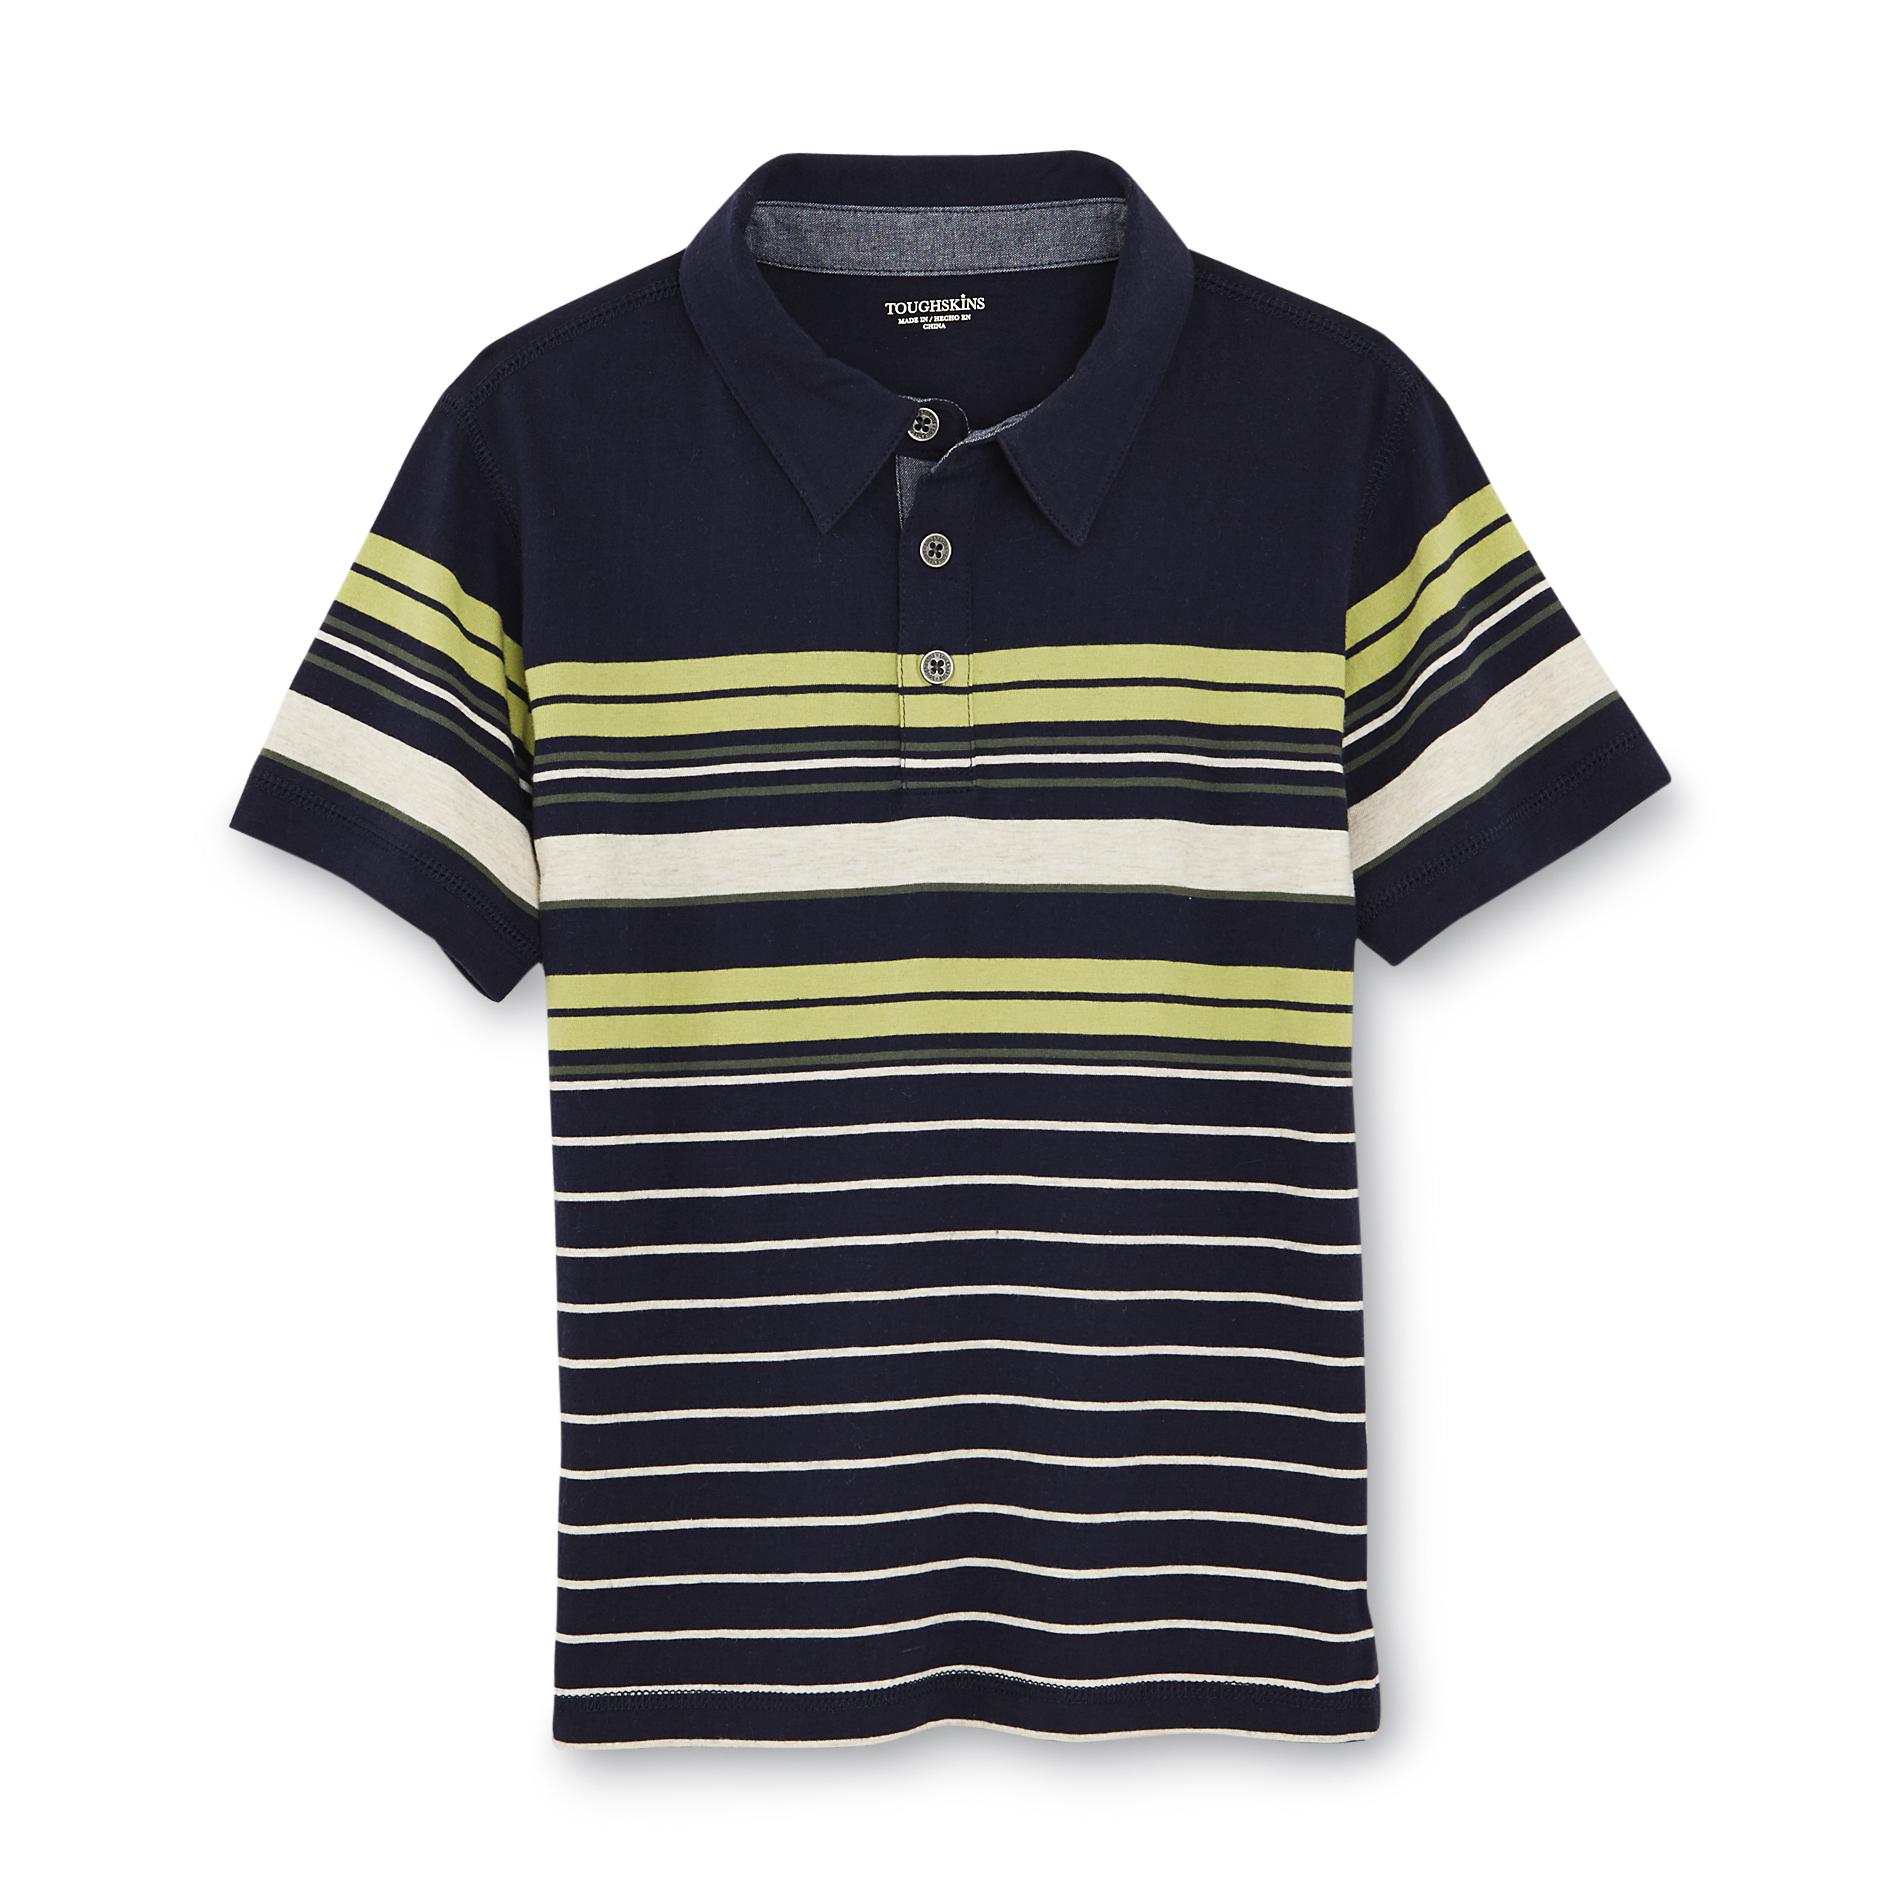 Toughskins Infant & Toddler Boy's Jersey Knit Polo Shirt - Striped